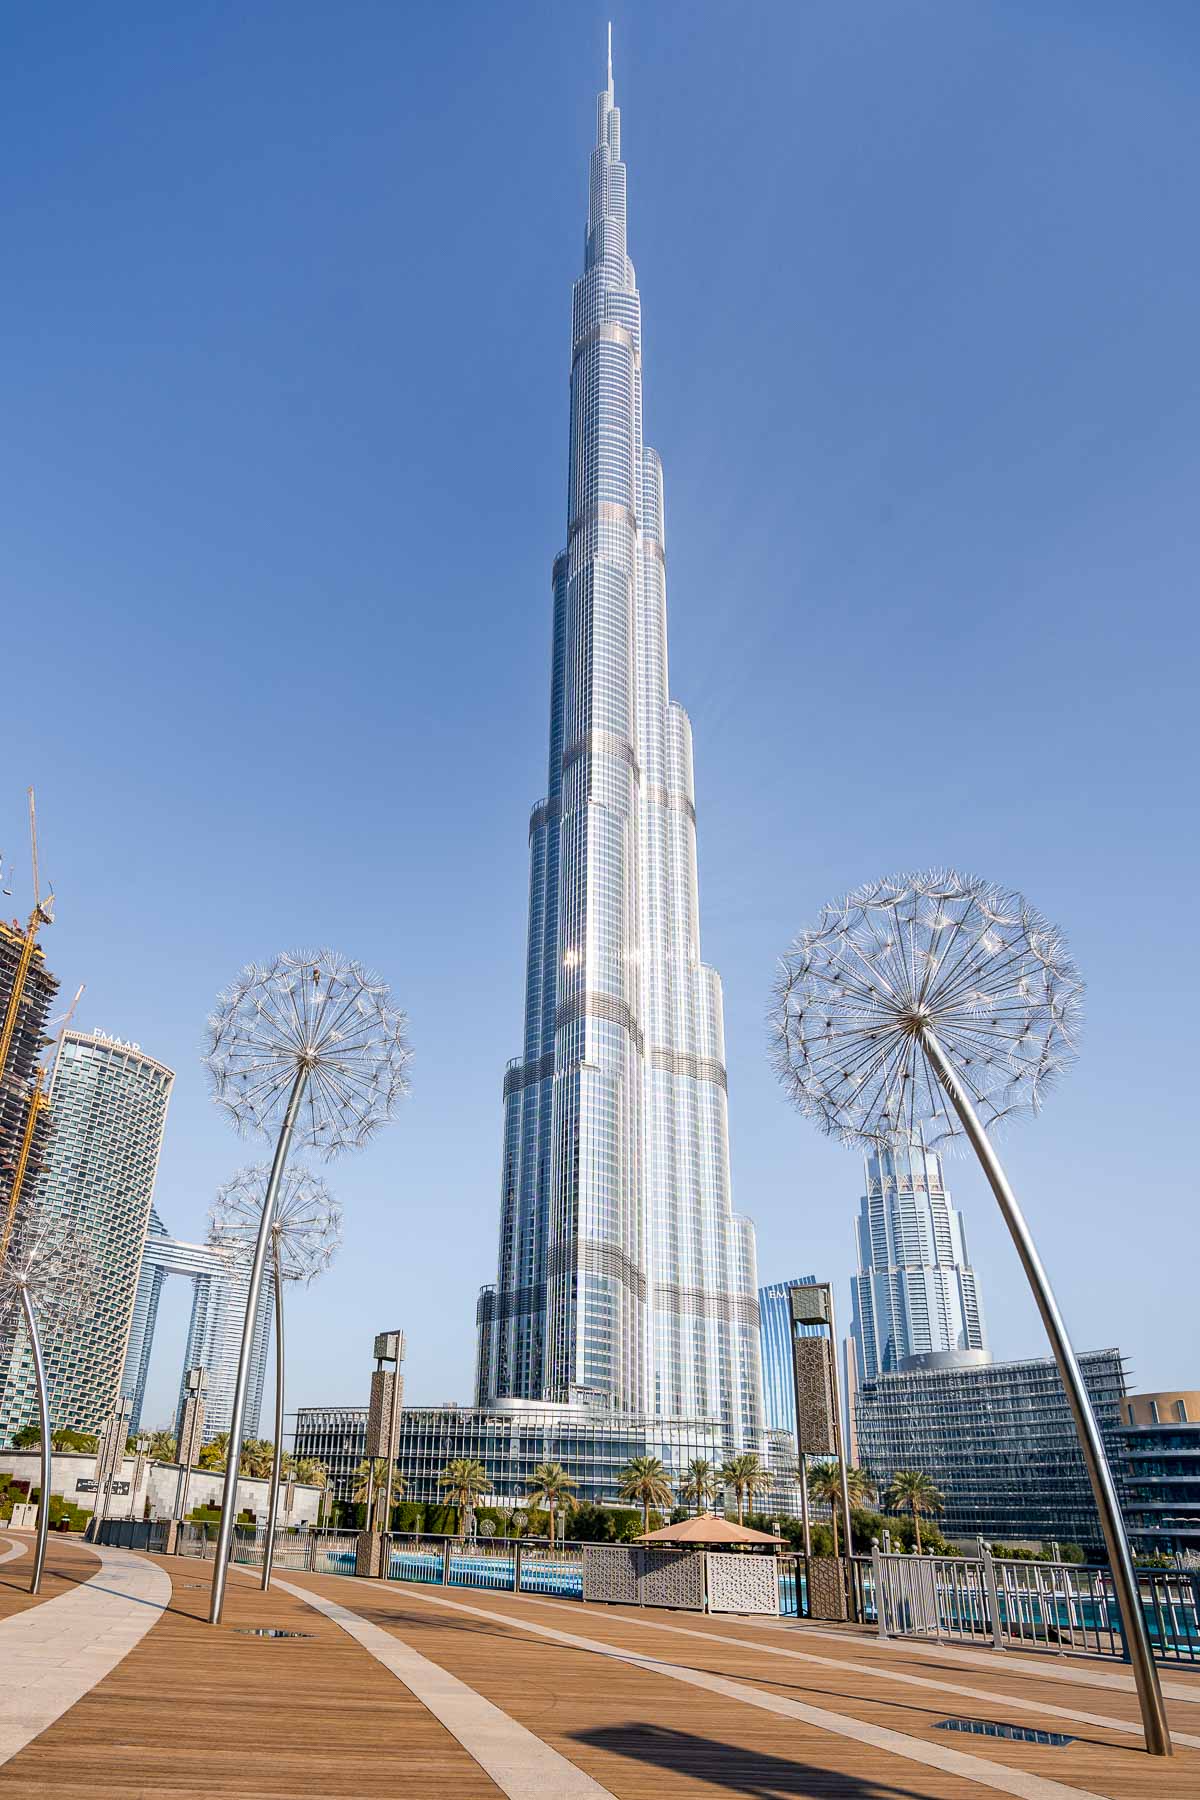 View of the Burj Khalifa from Burj Park by Emaar in Dubai